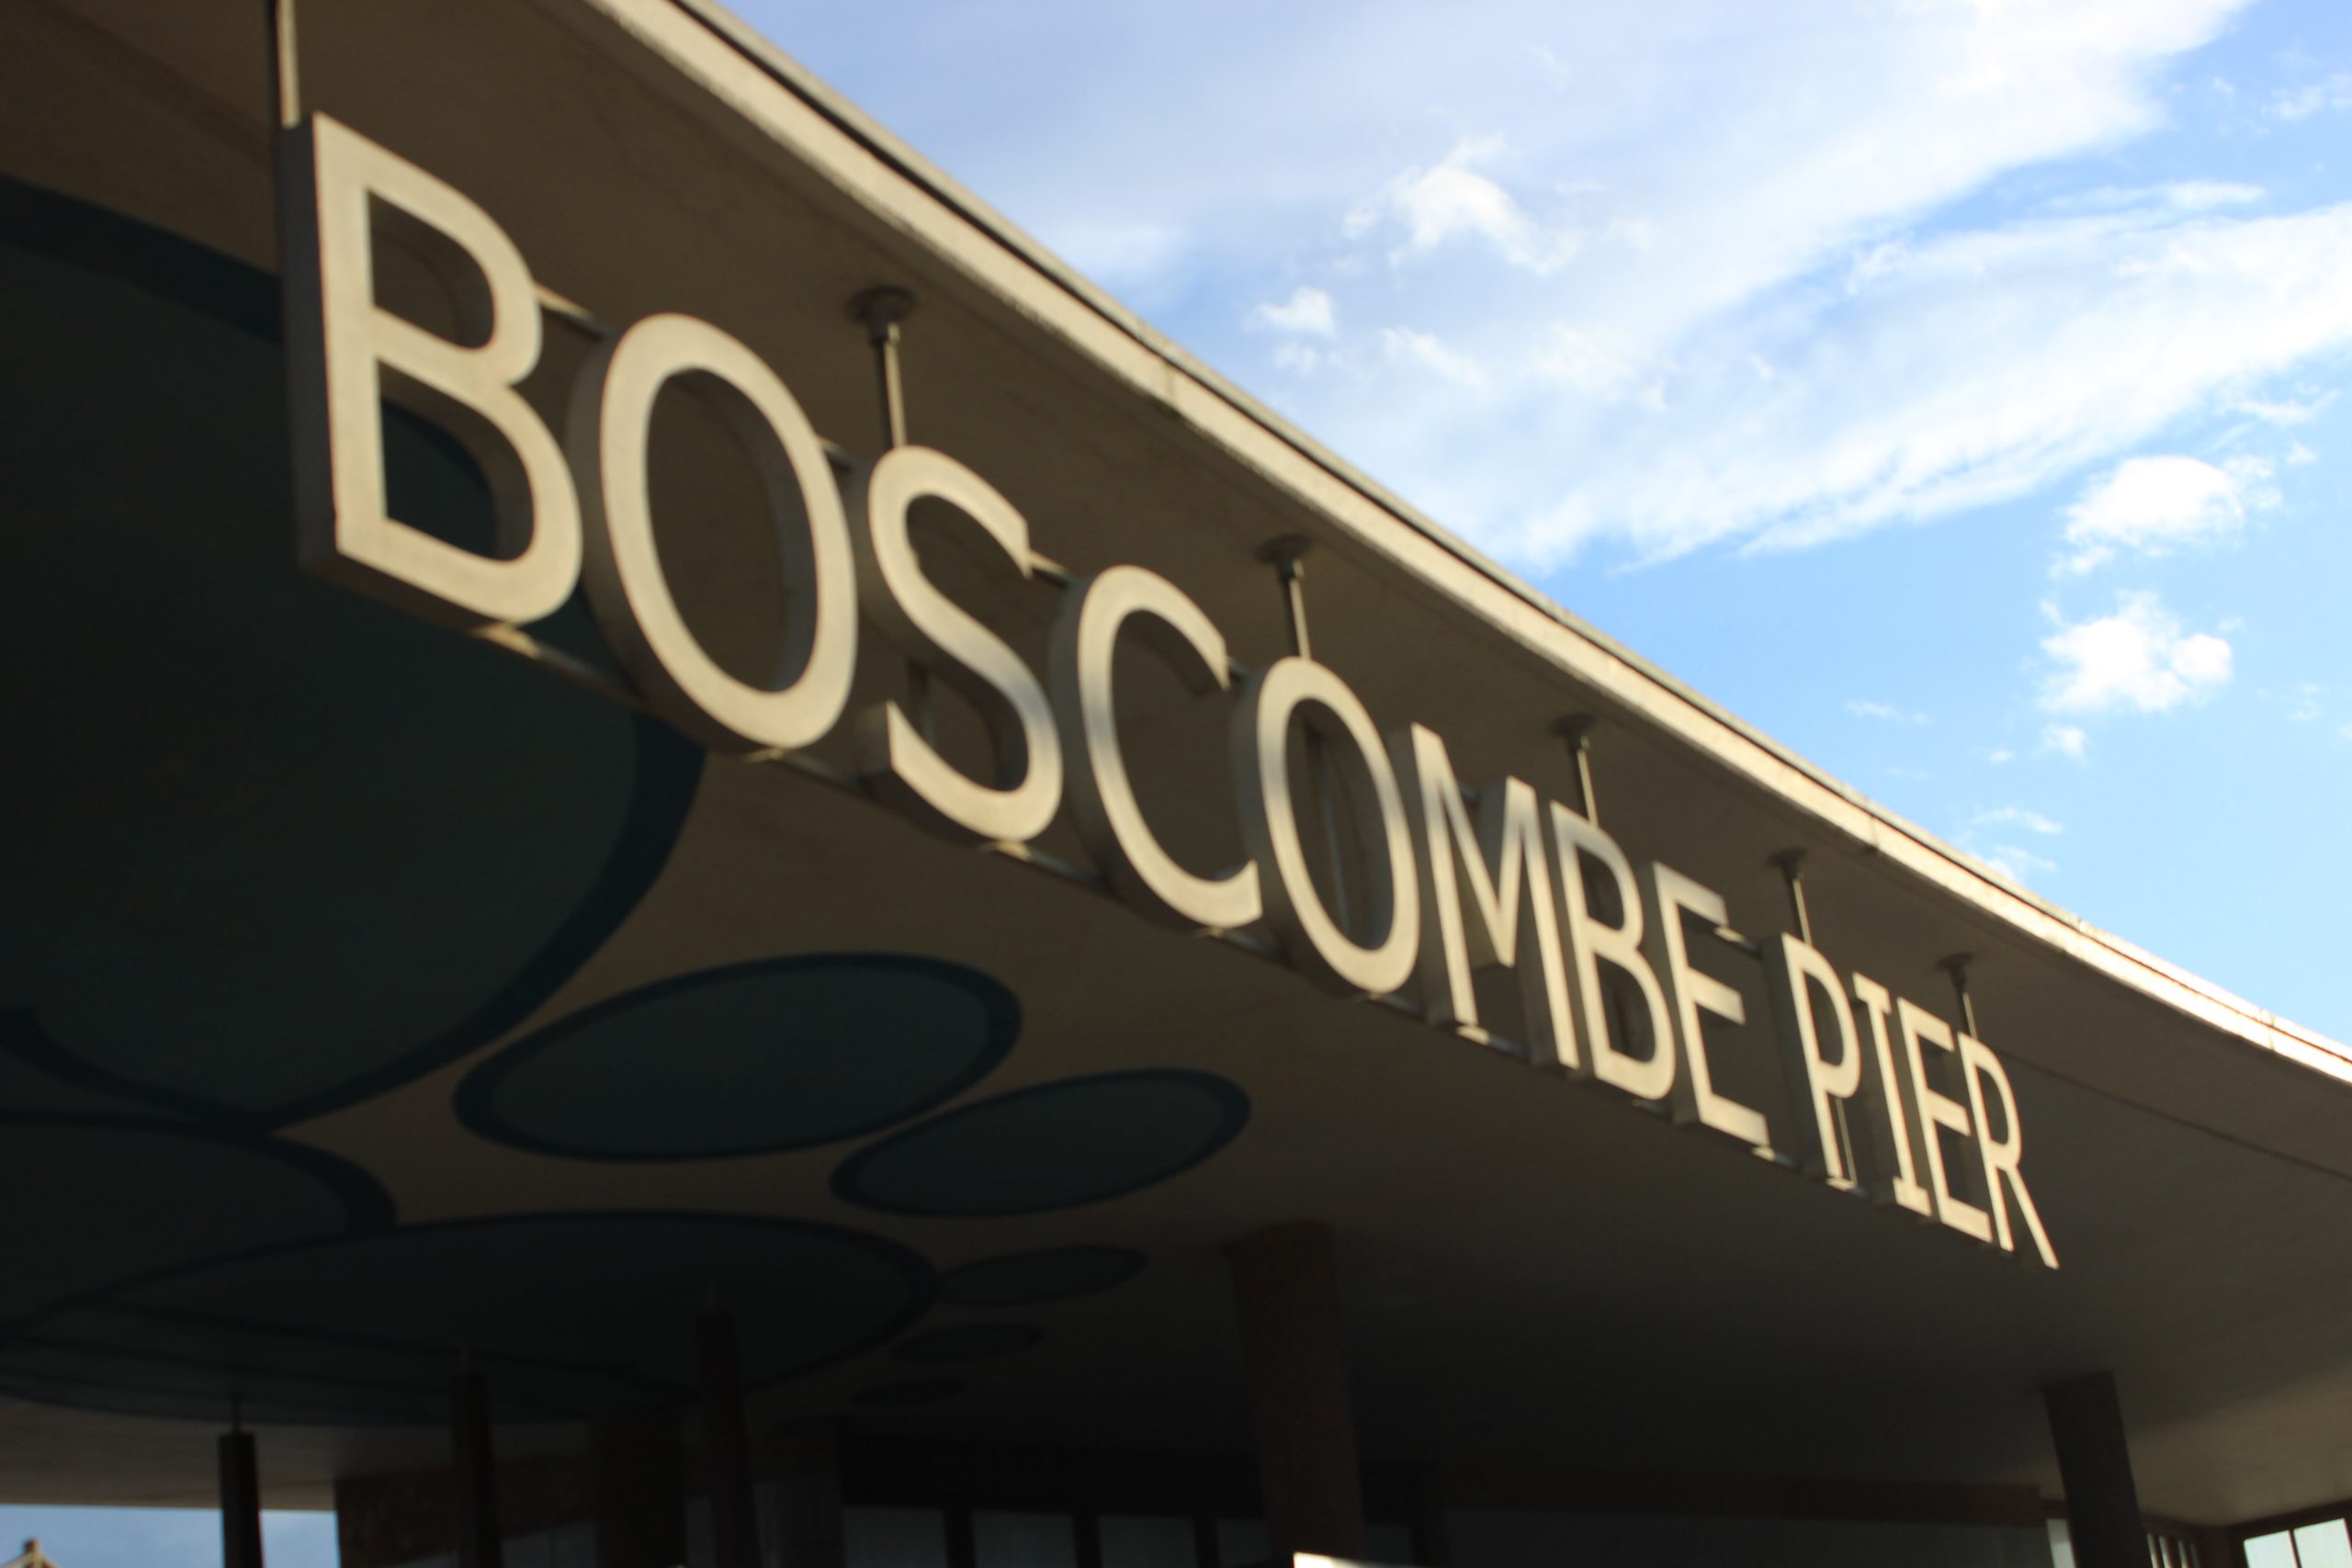 Boscombe Pier entrance